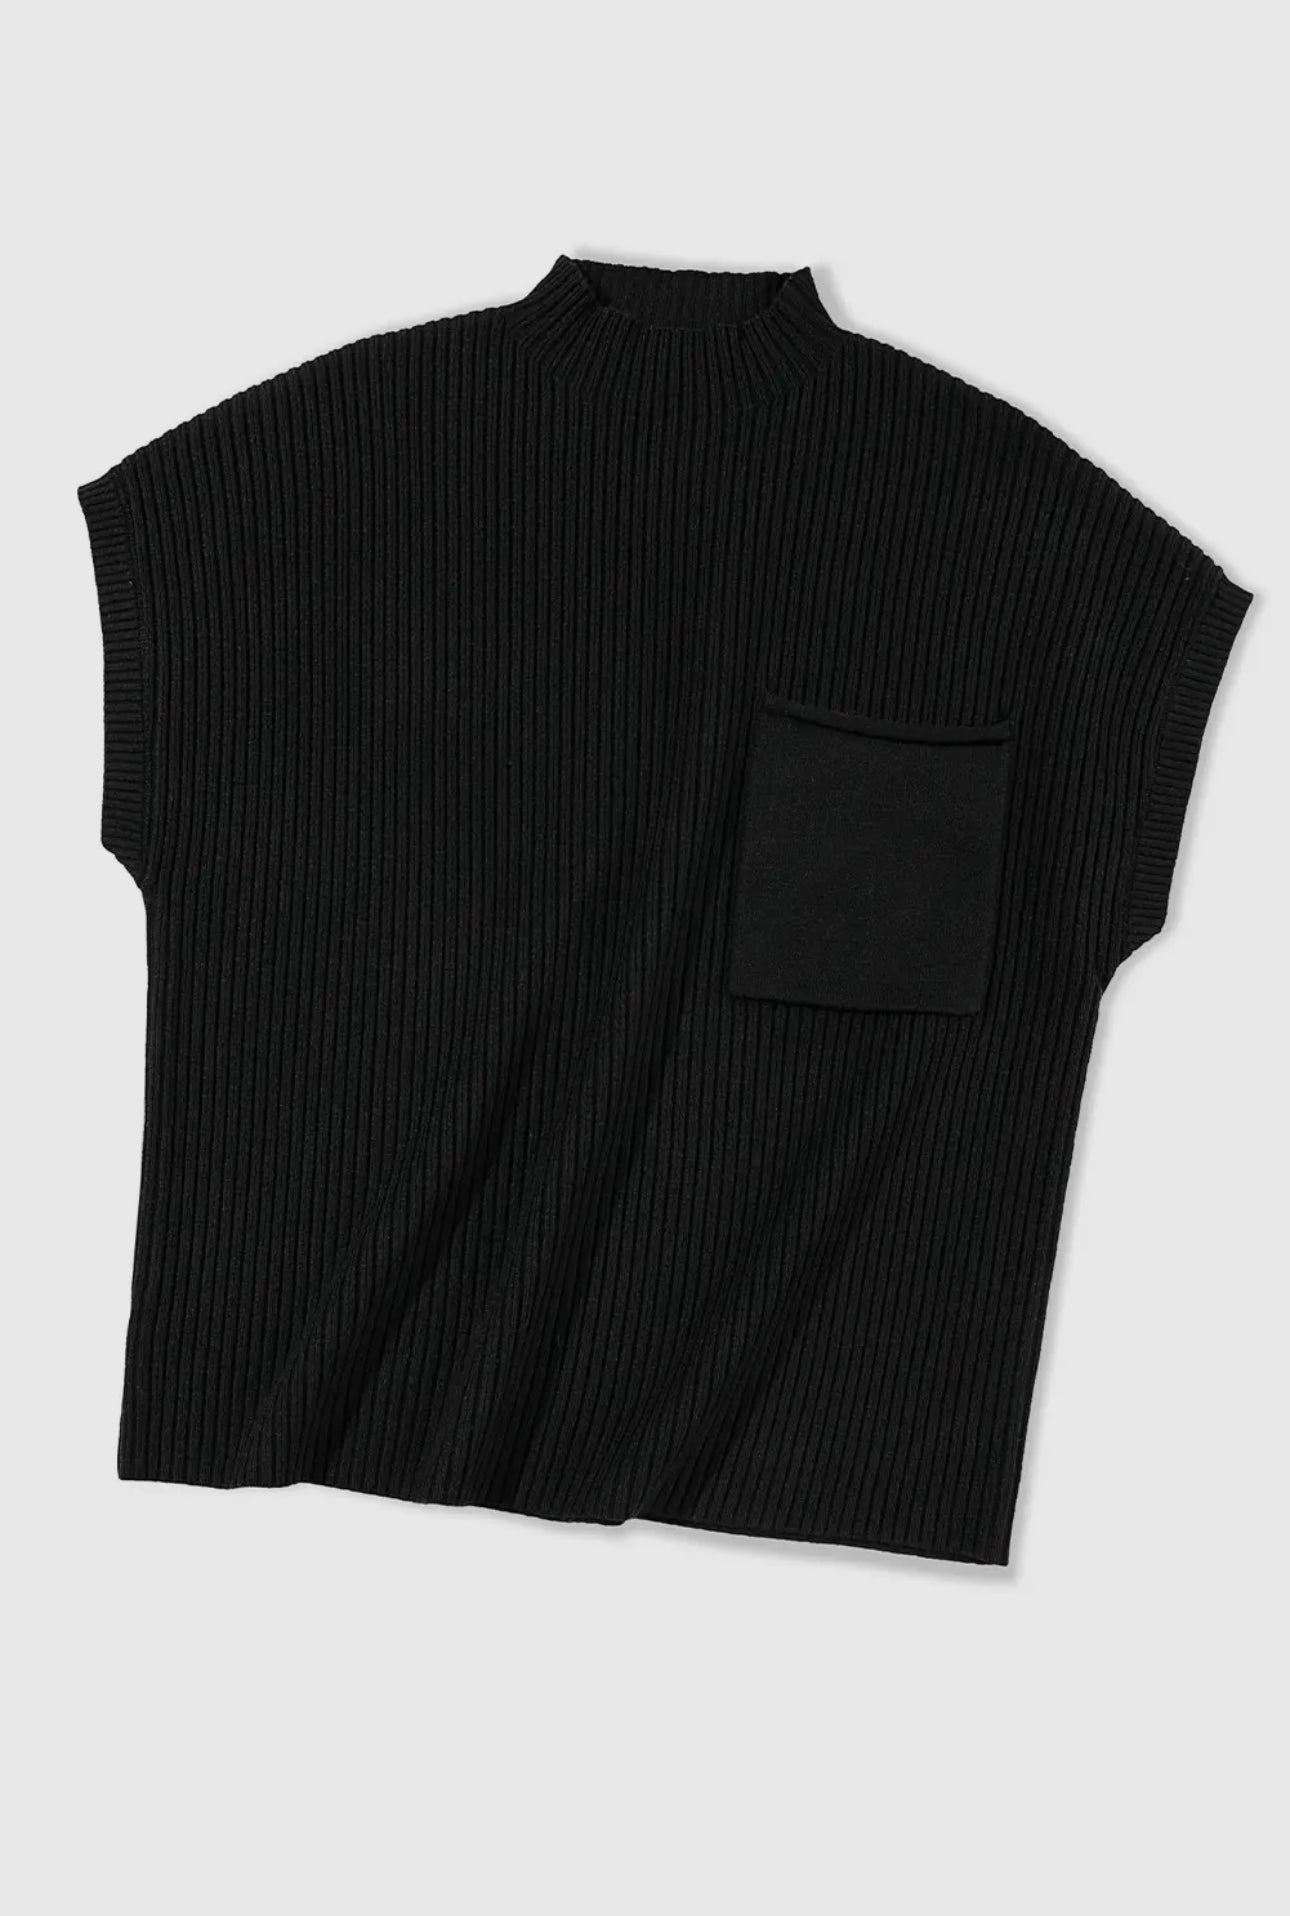 Day Dreamin’ Sweater (Black)